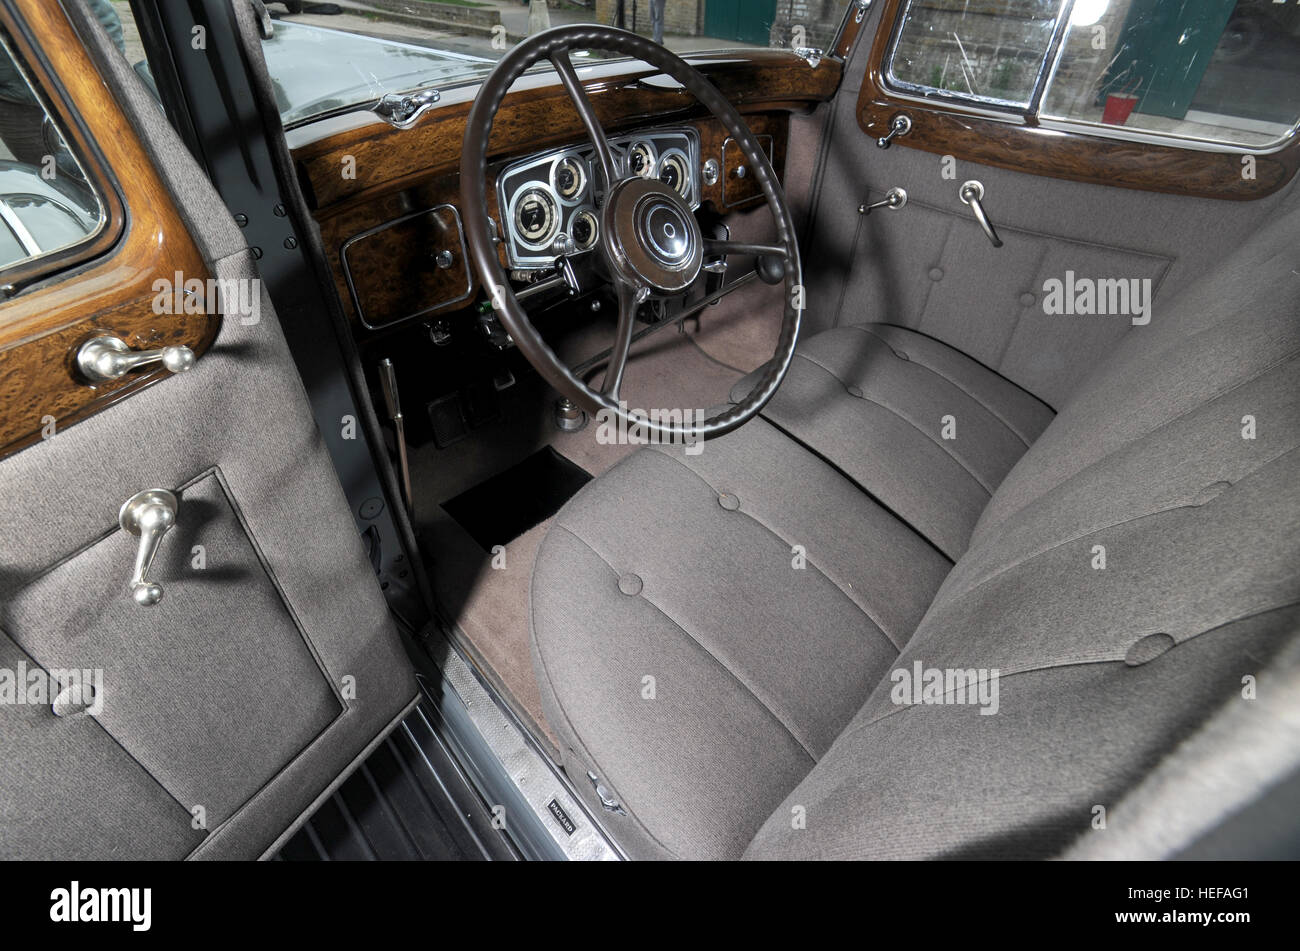 1934 Packard vintage American luxury car interior Stock Photo - Alamy